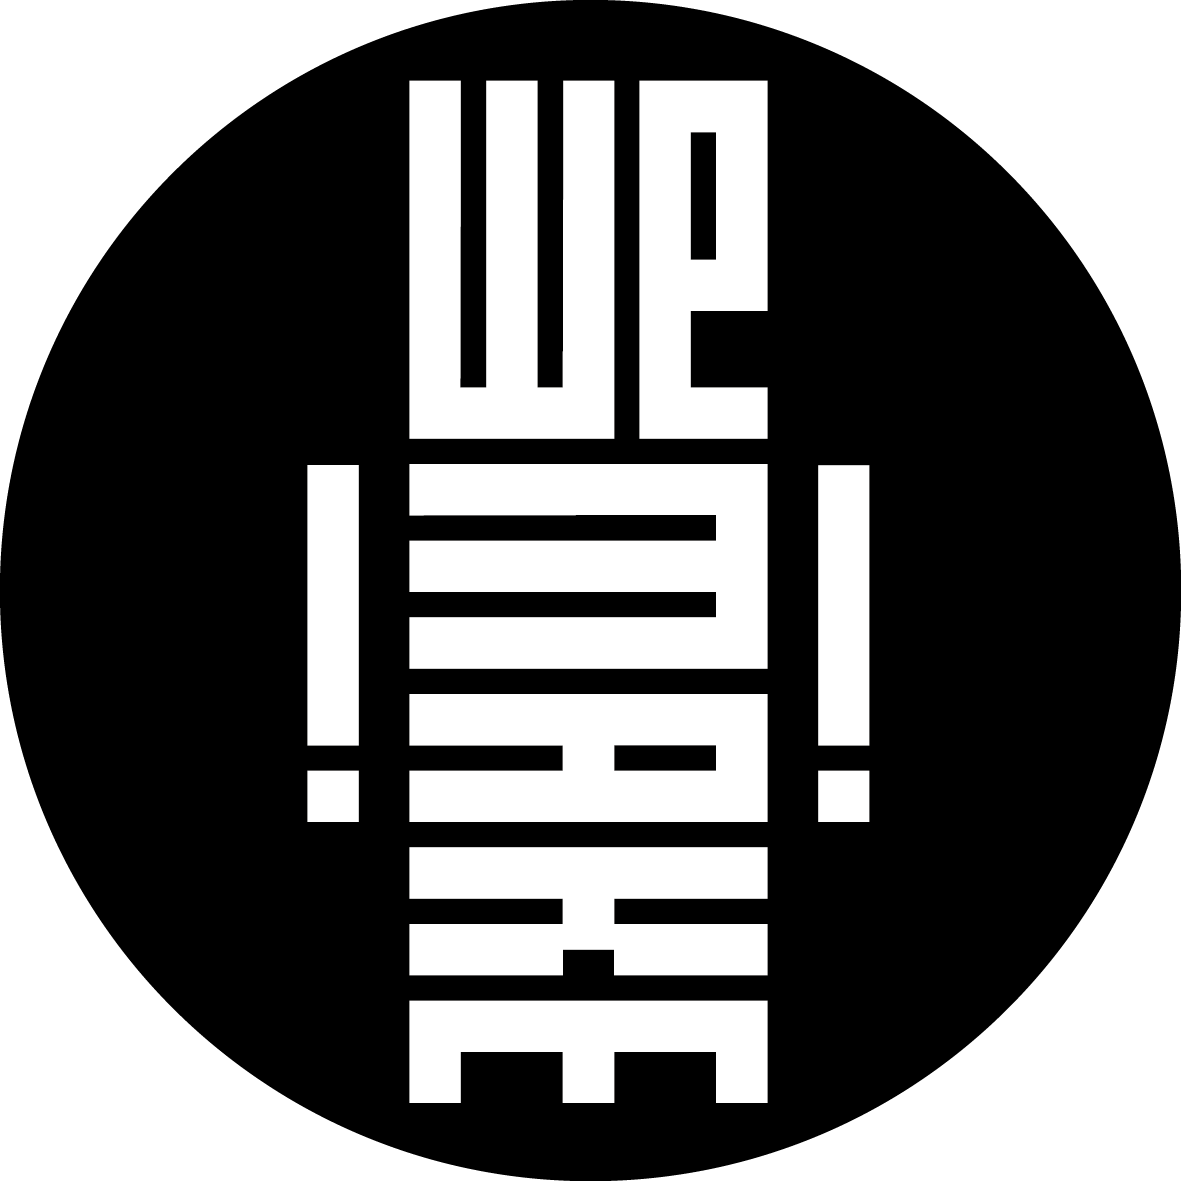 Wemake logo bk.png